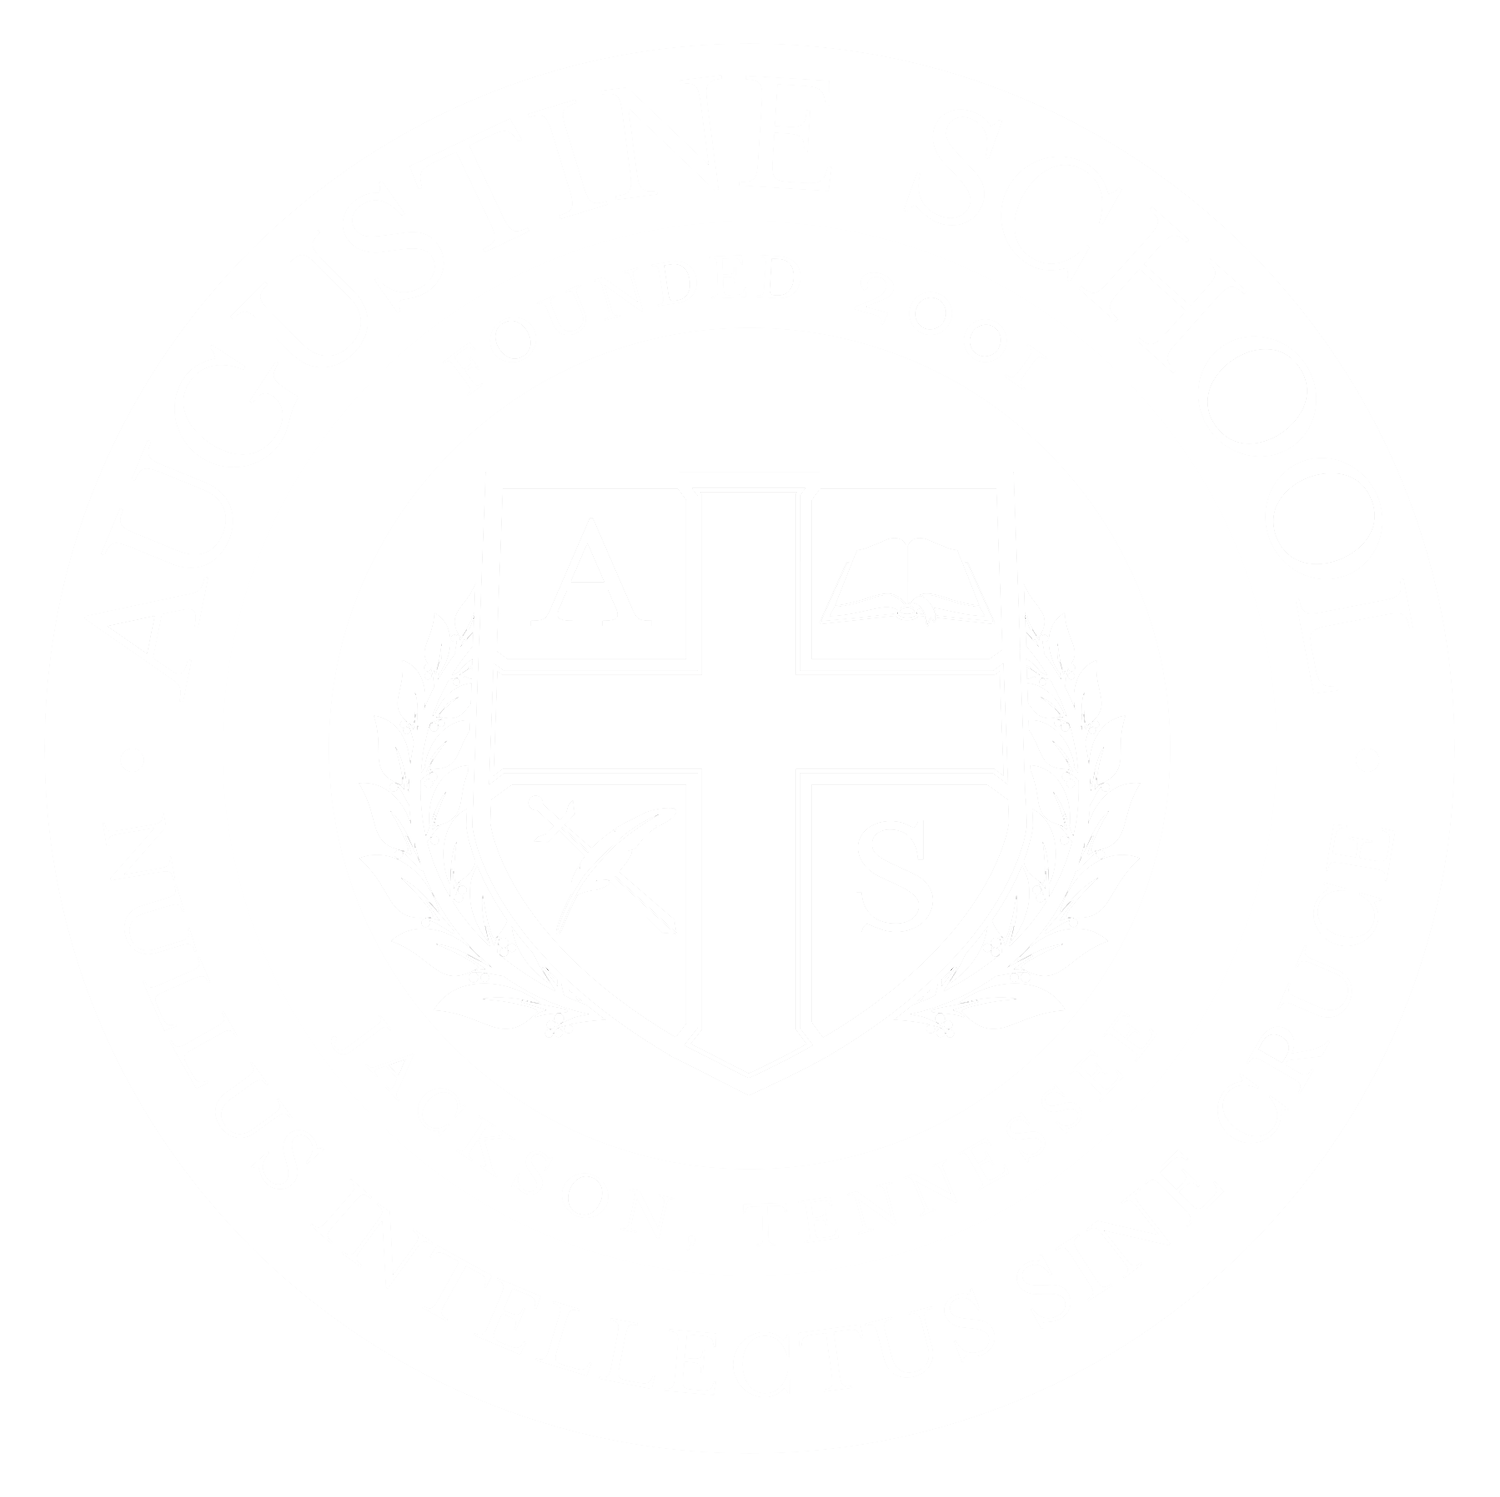 AUGUSTINE SCHOOL